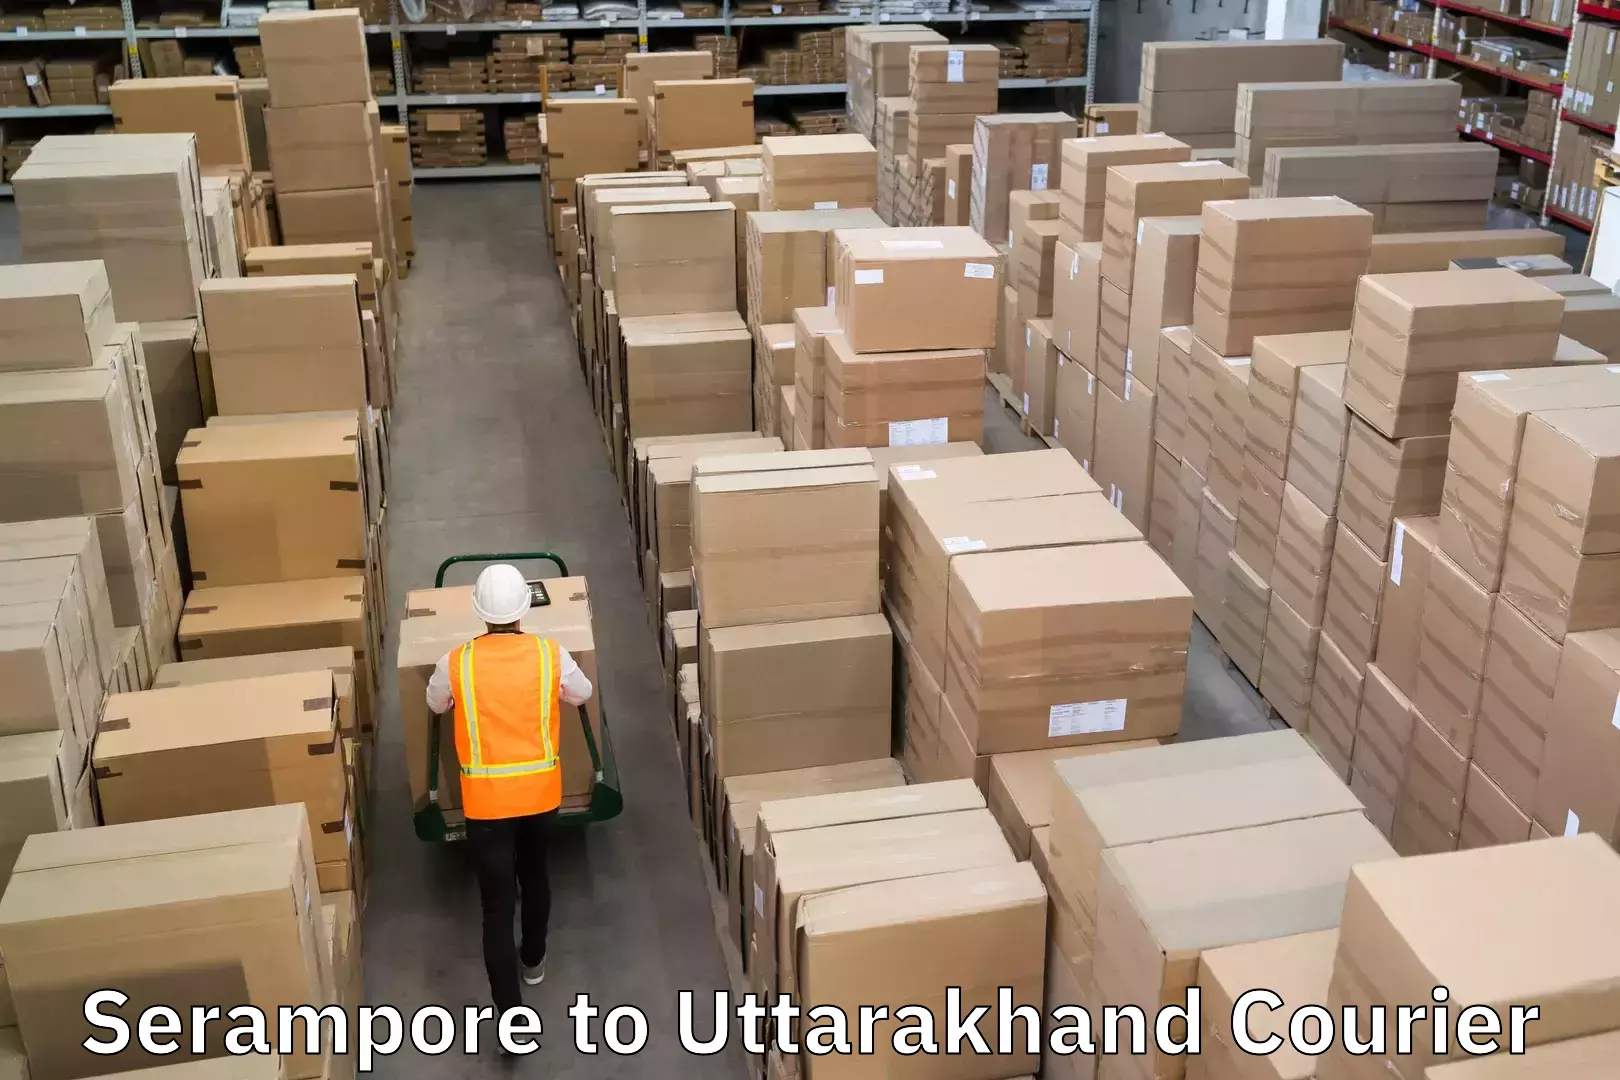 Global logistics network Serampore to Uttarakhand